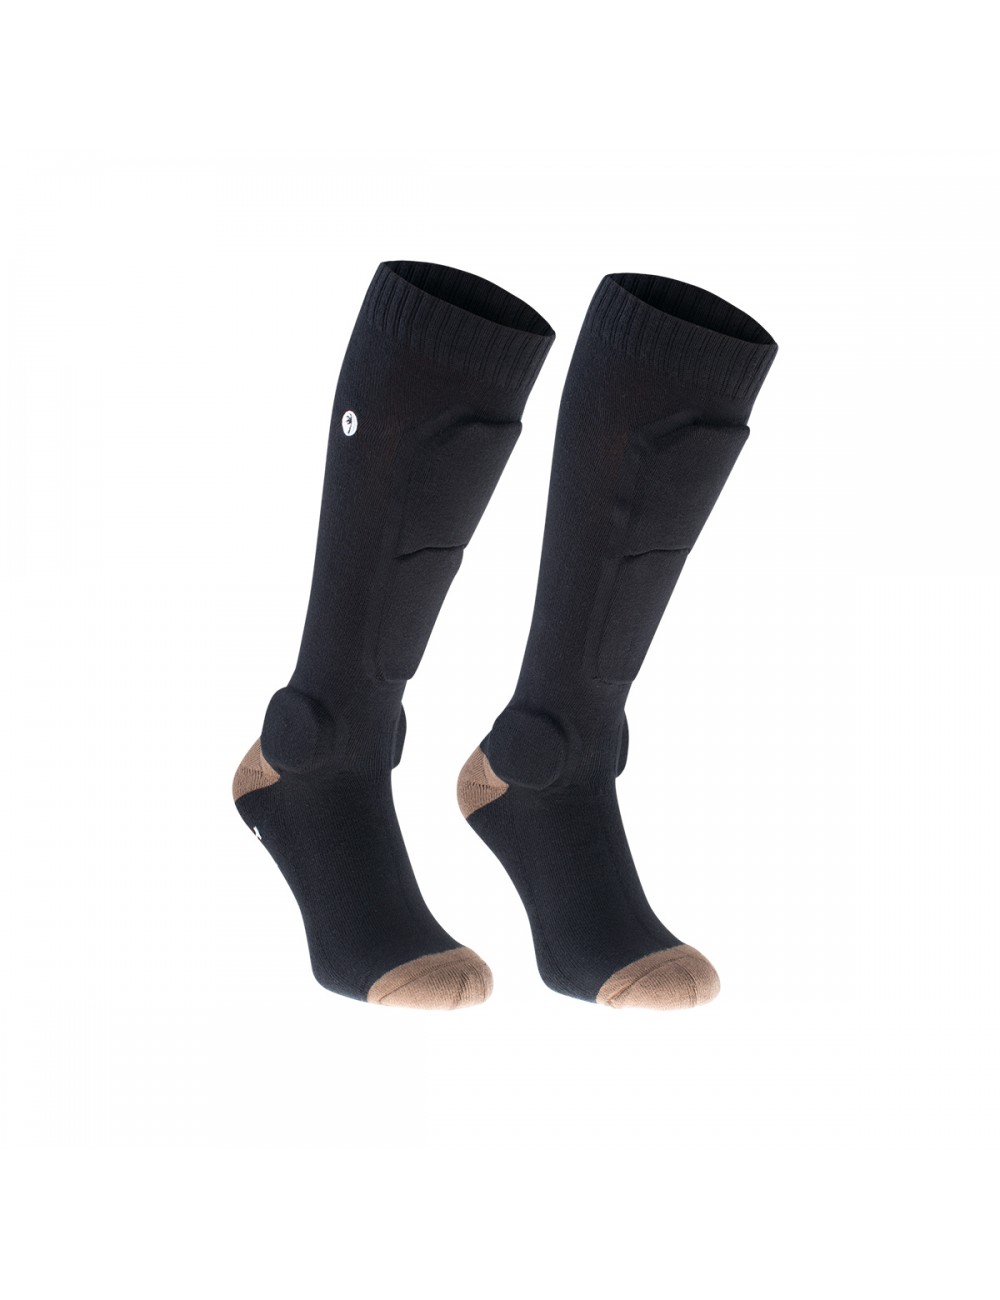 ION BD 2.0 Protection Socks - Black